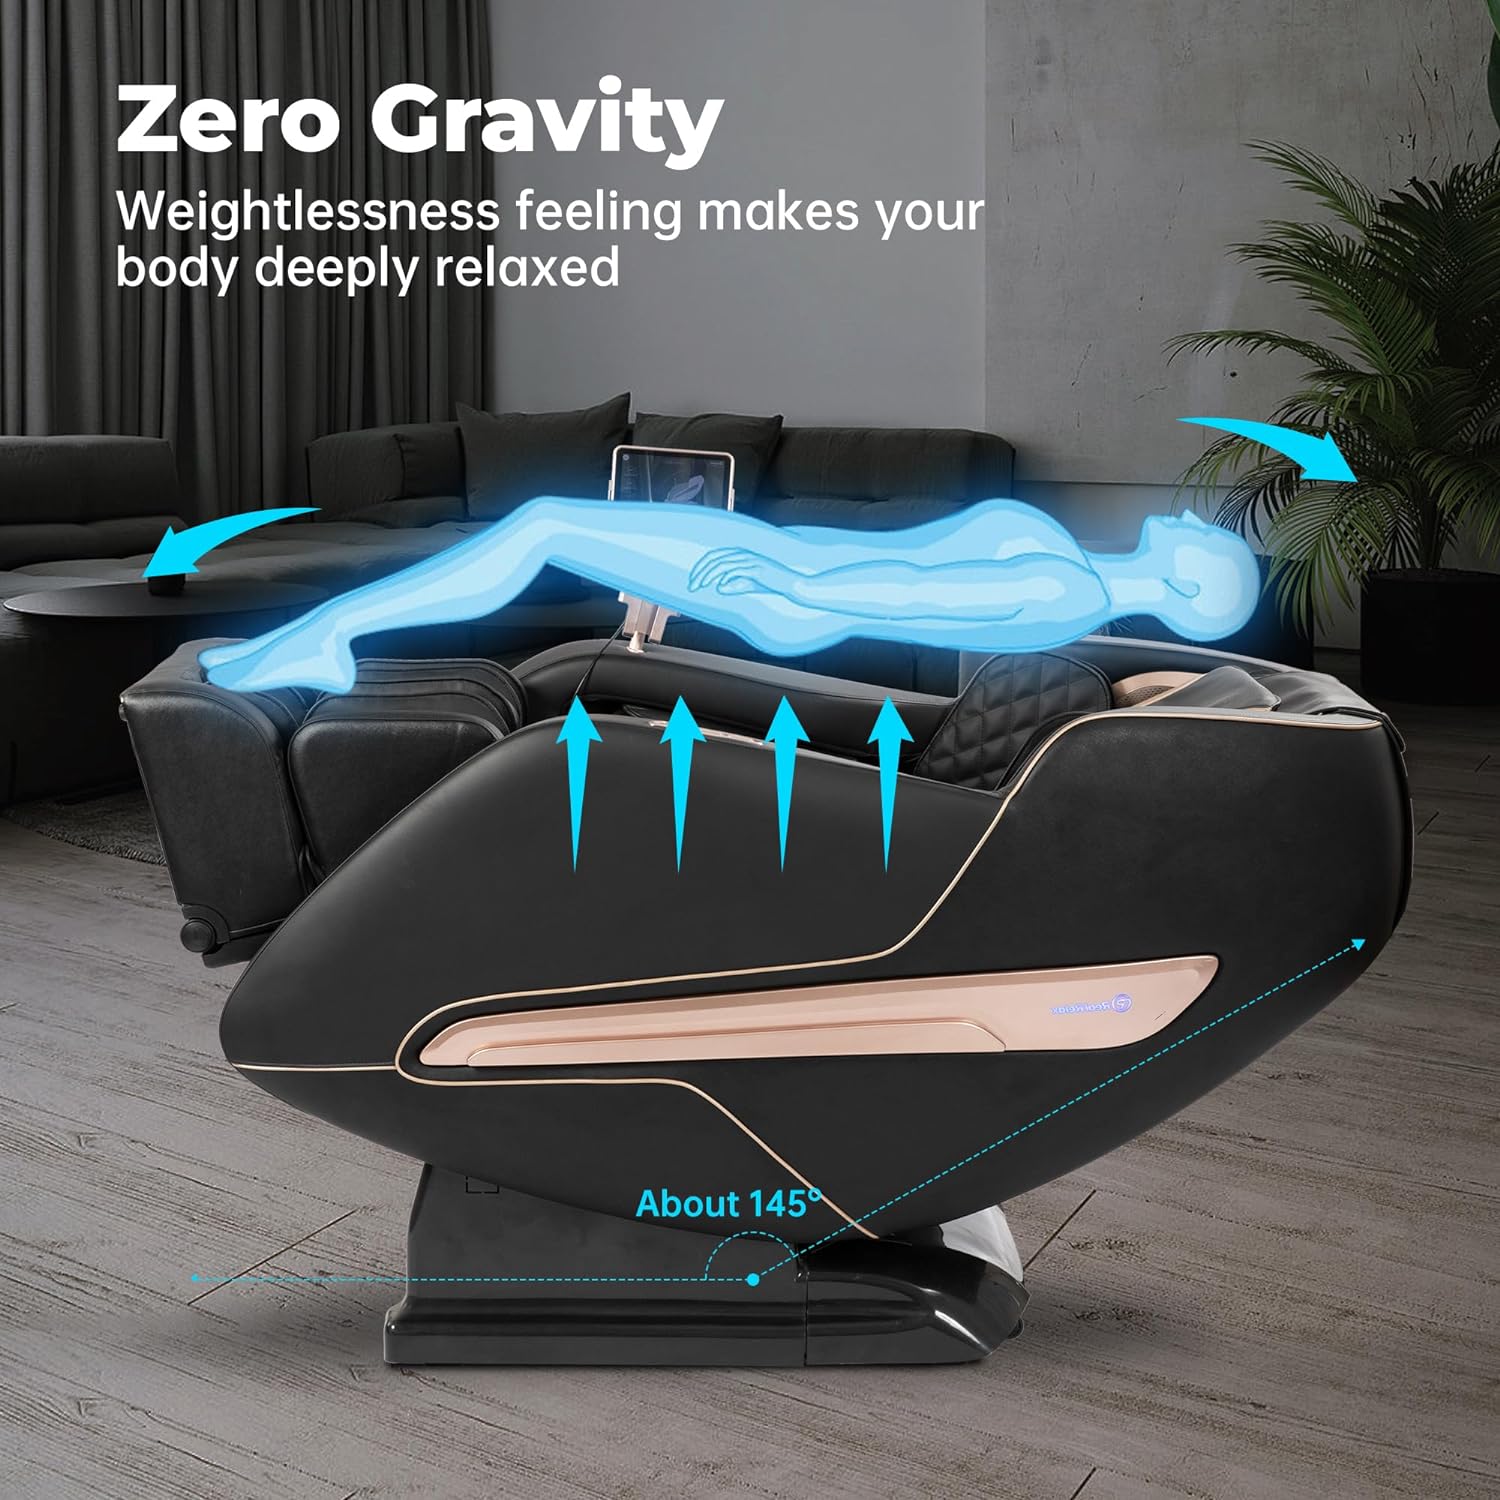 Real Relax PS6000 - Zero Gravity